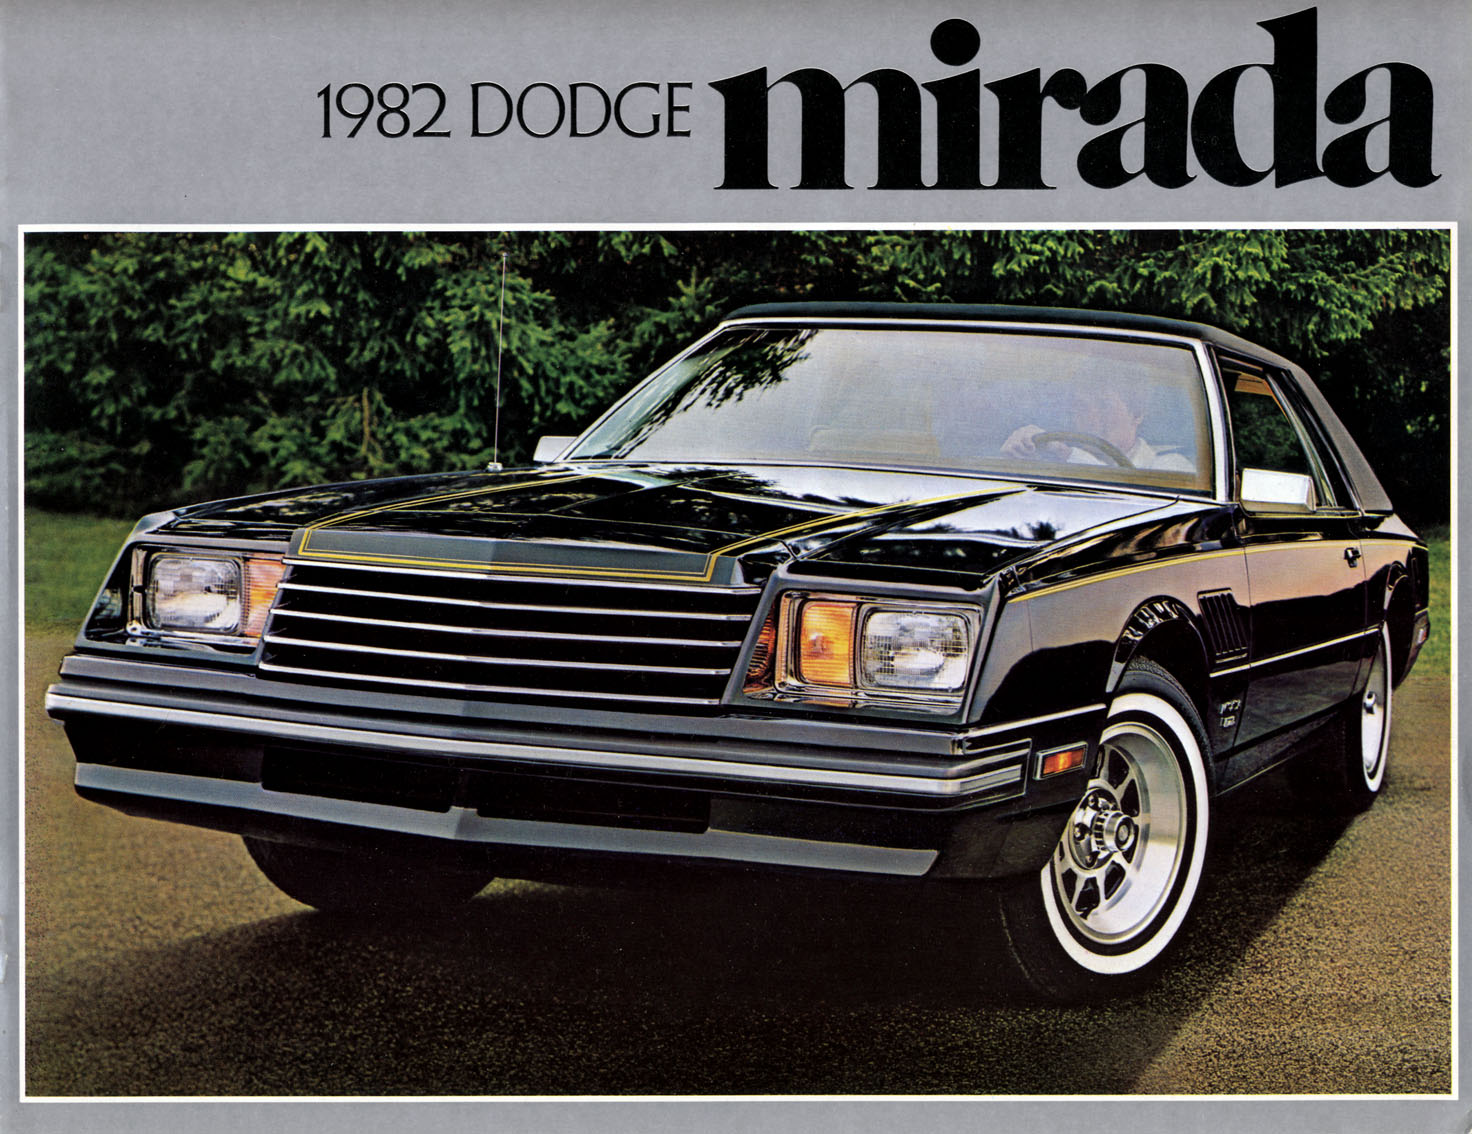 1982 Dodge Mirada Brochure Page 1